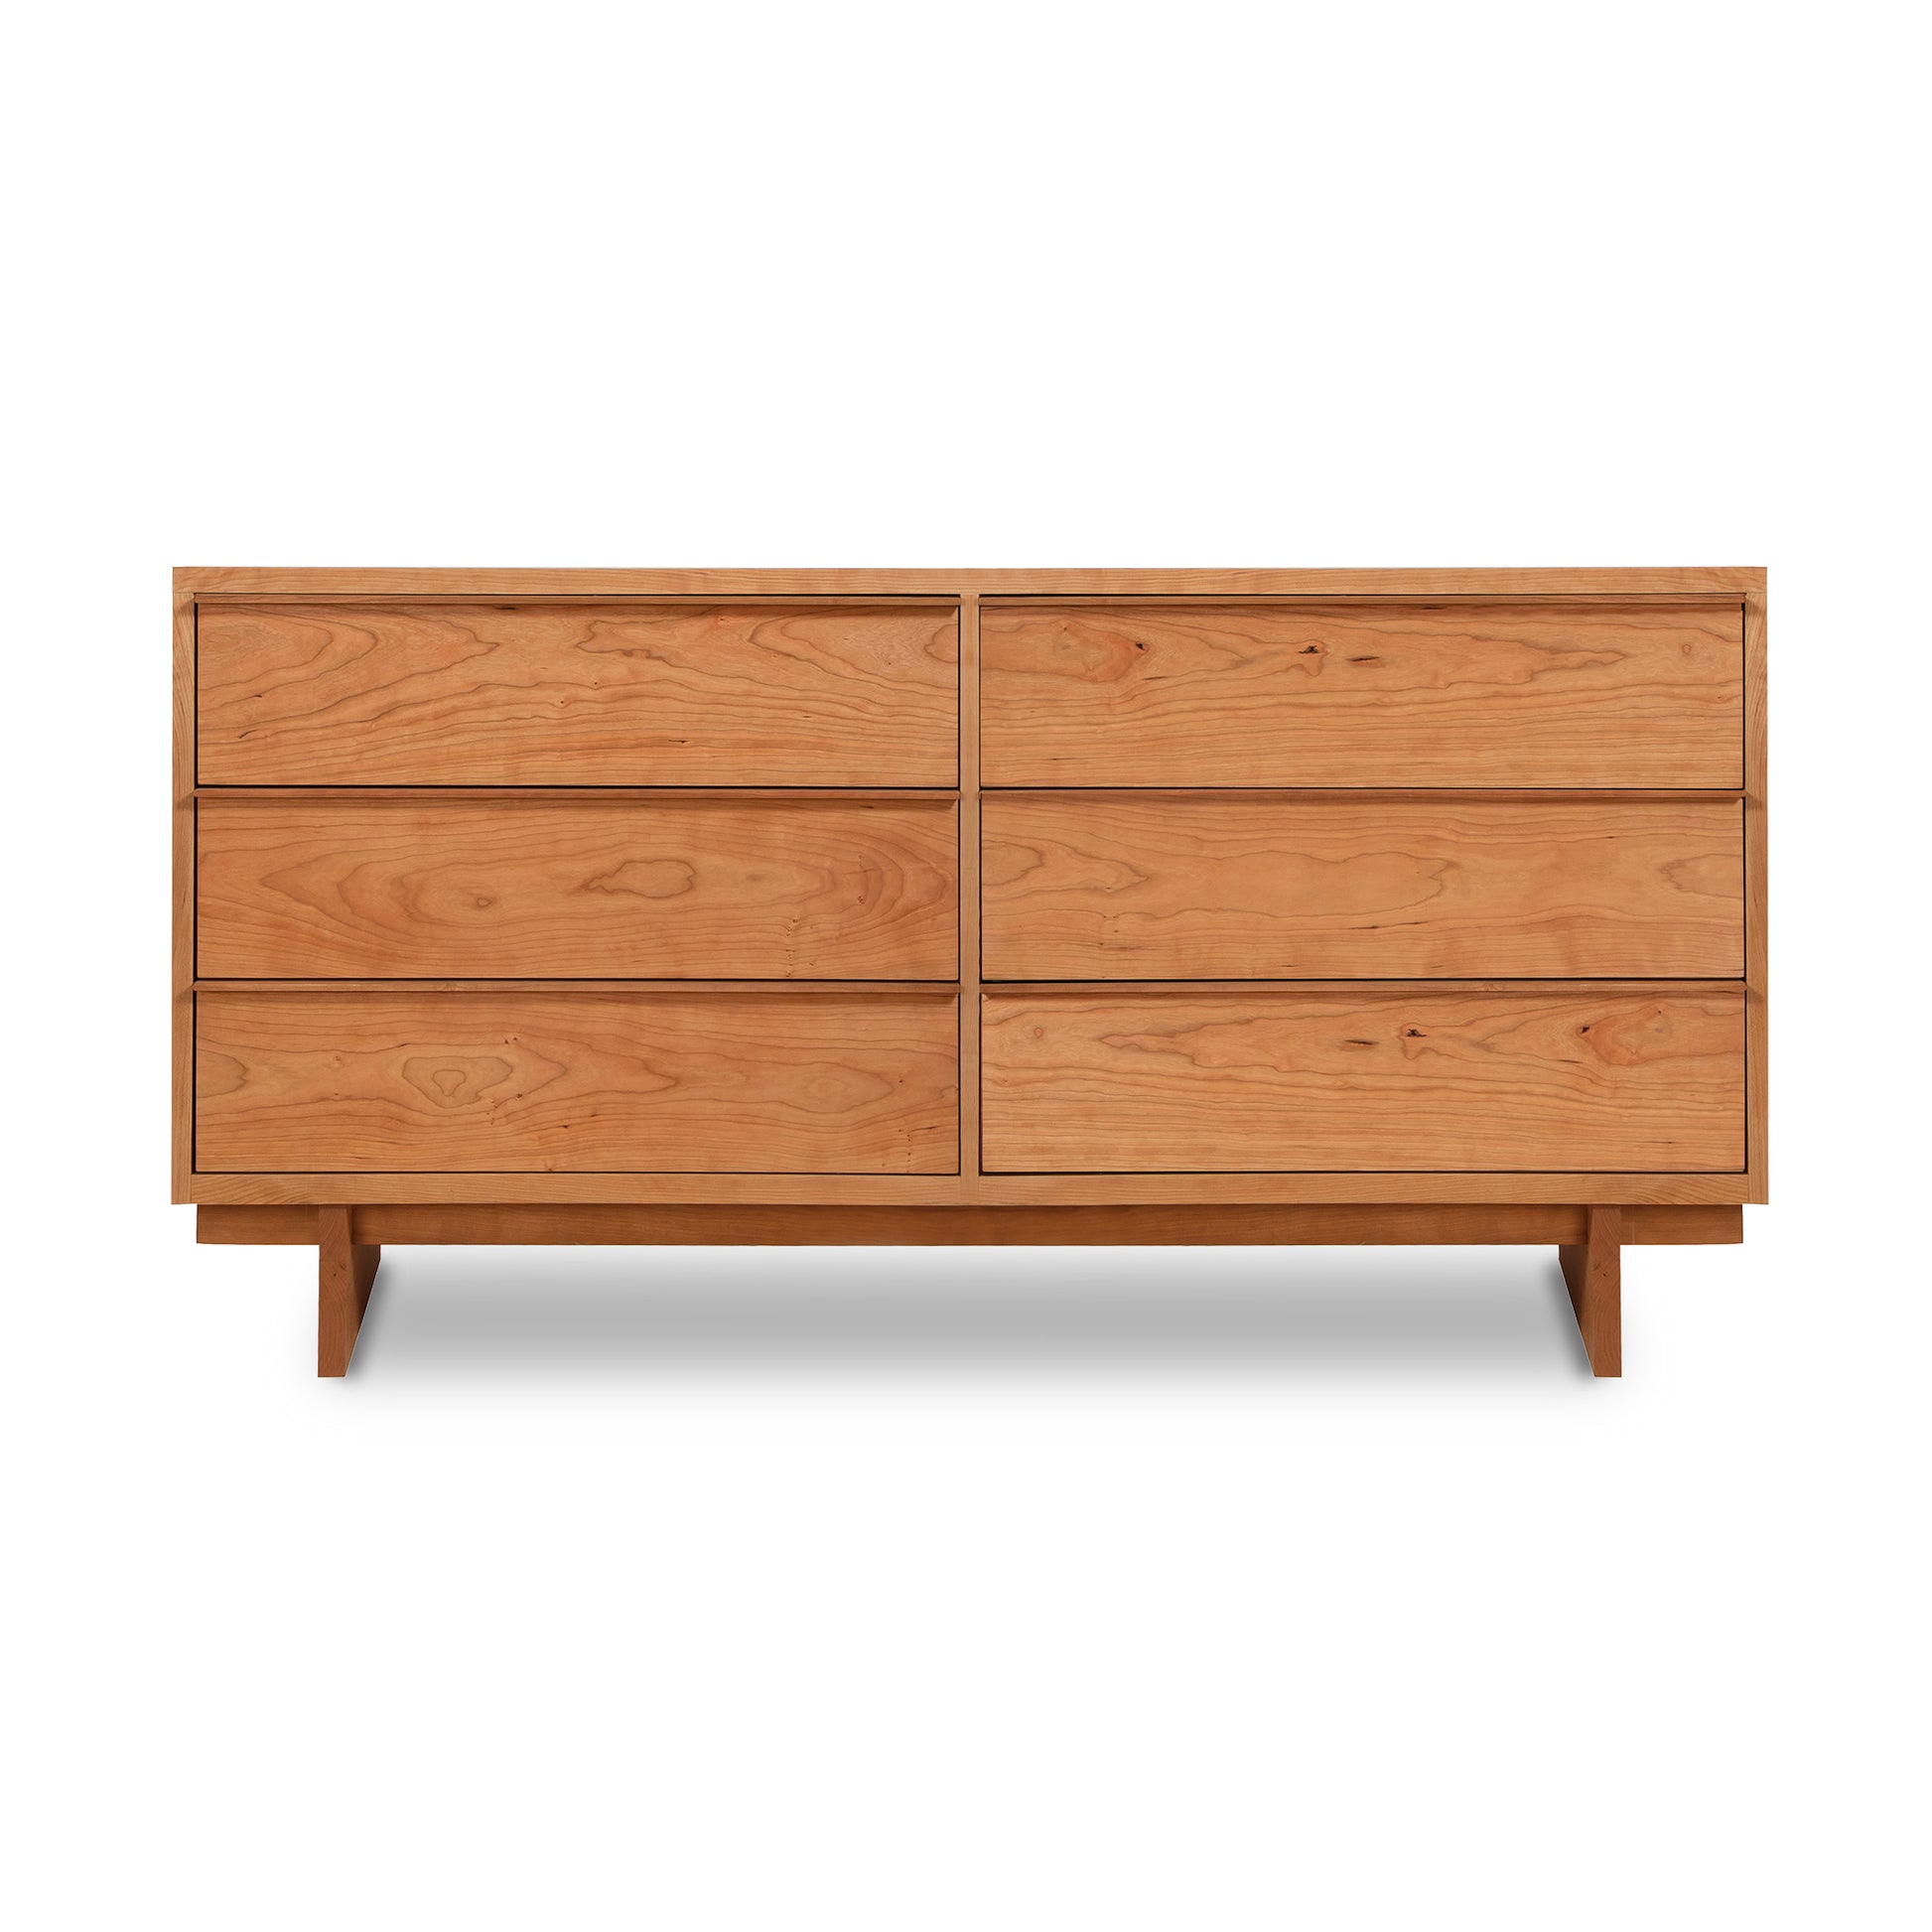 A modern design wooden six-drawer Vermont Furniture Designs Kipling Dresser on a plain background.